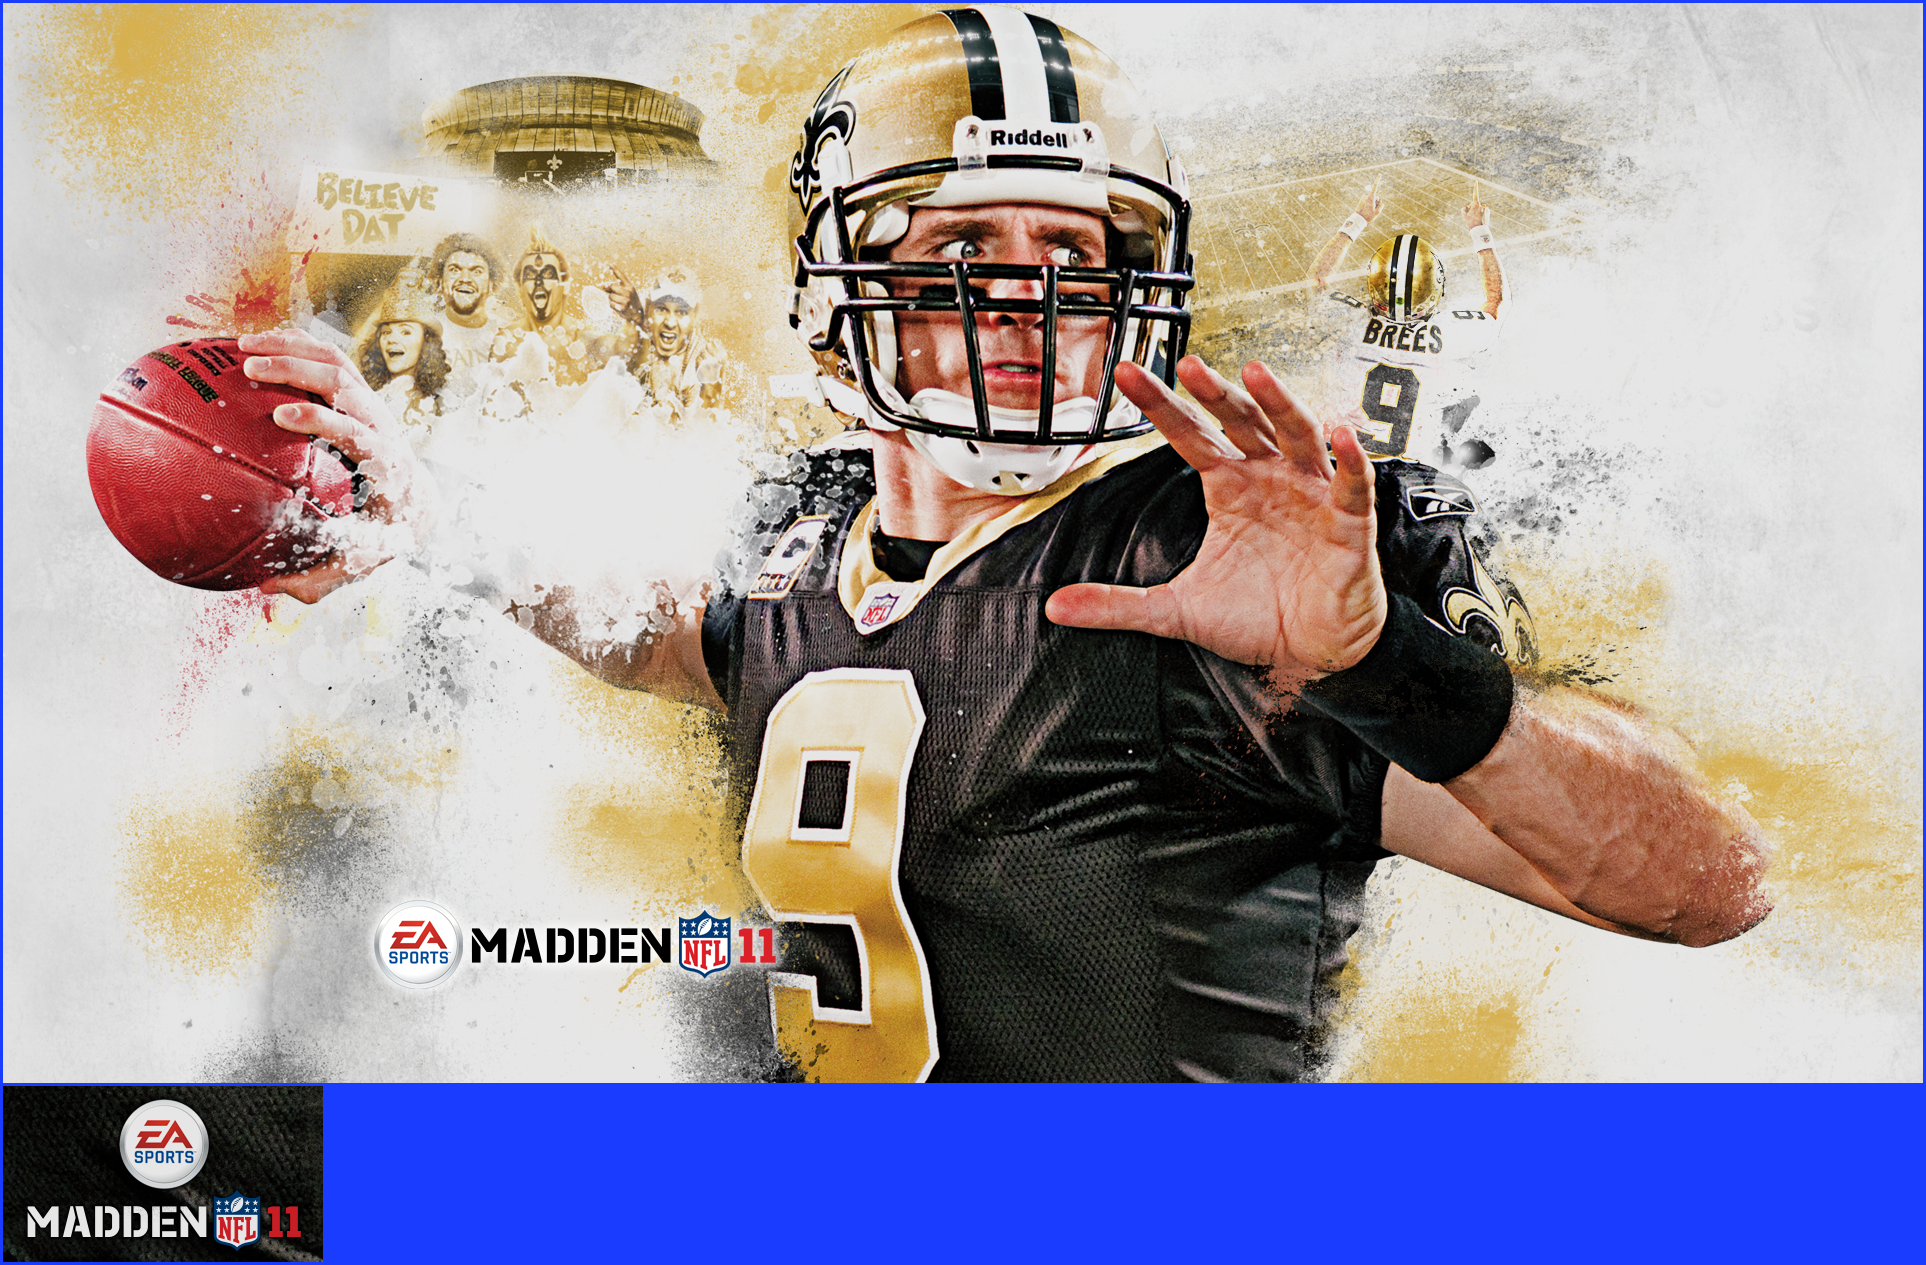 Madden NFL 11 - Game Banner & Icon